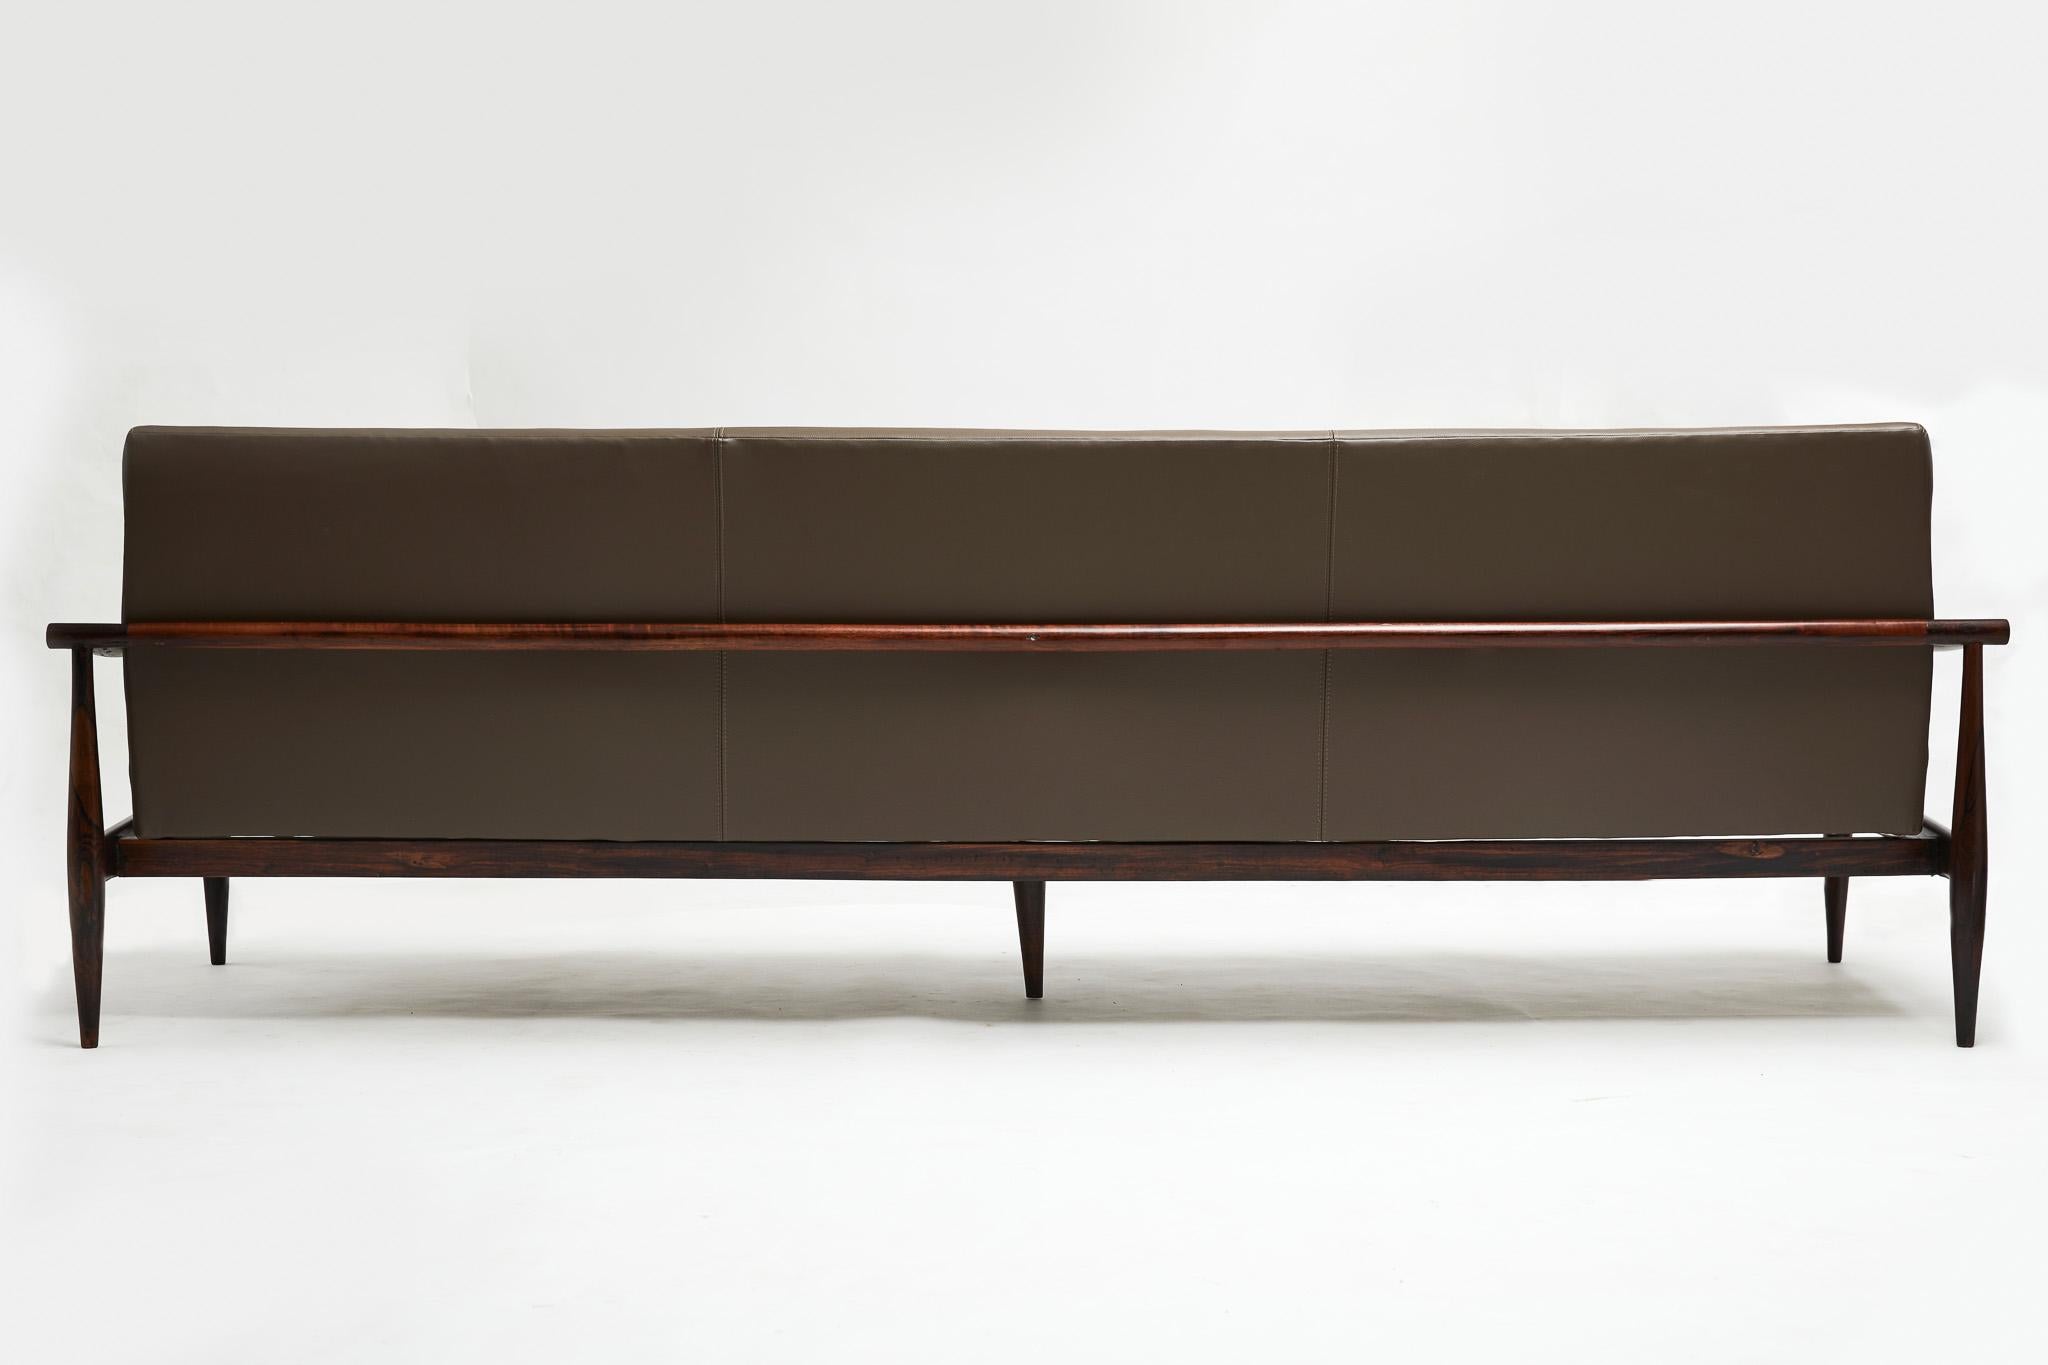 Brazilian Modern Sofa in Hardwood & Brown Leather by Liceu De Artes 1960 For Sale 1